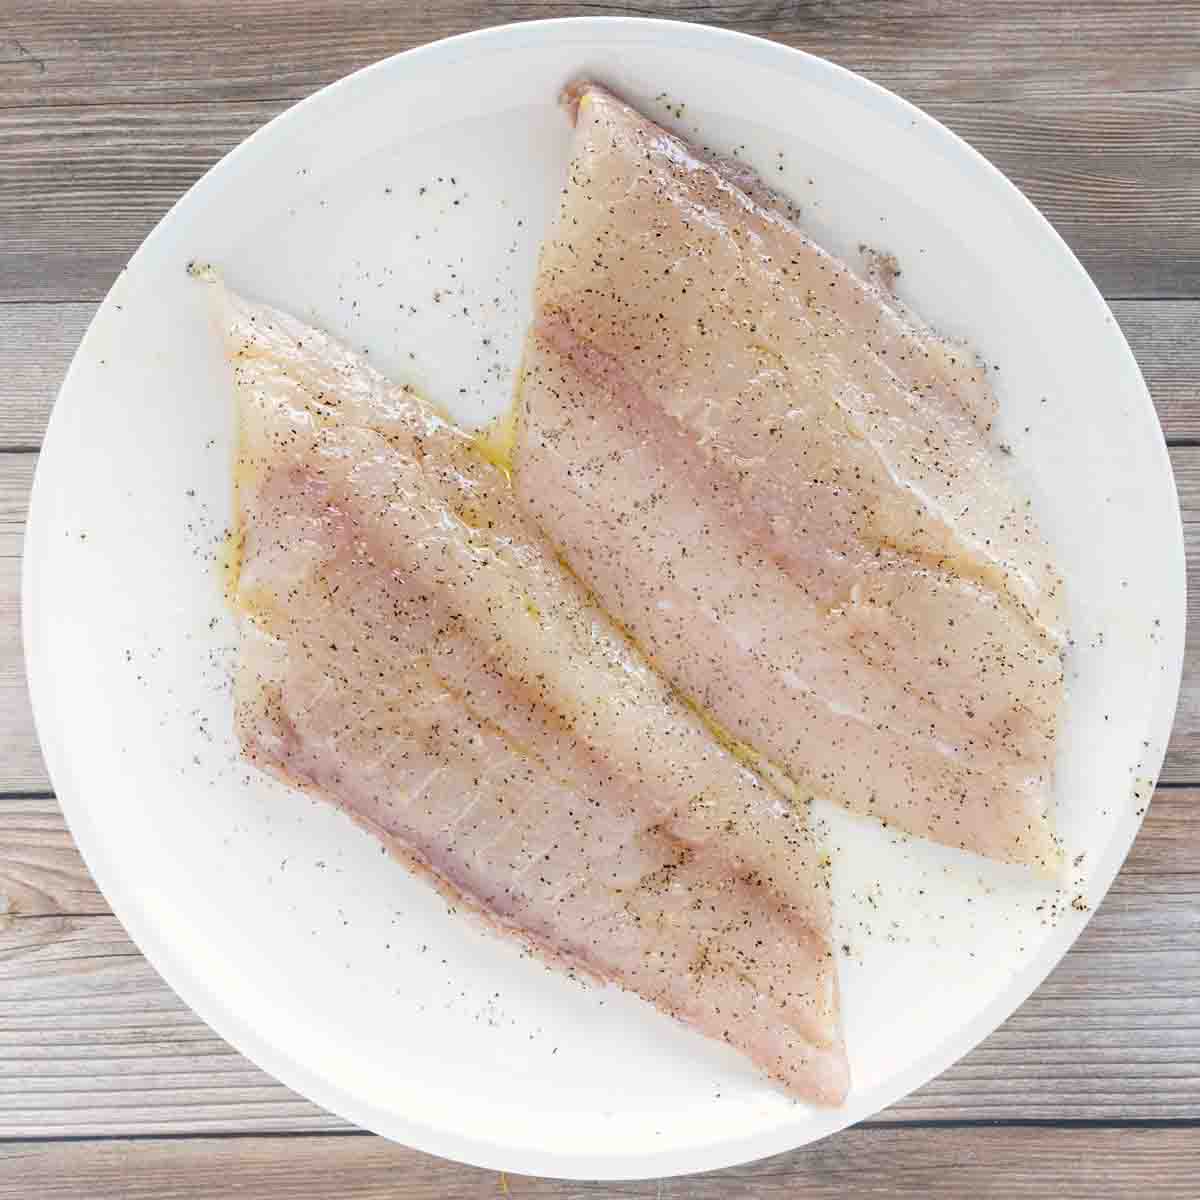 seasoned and oiled flounder fillets